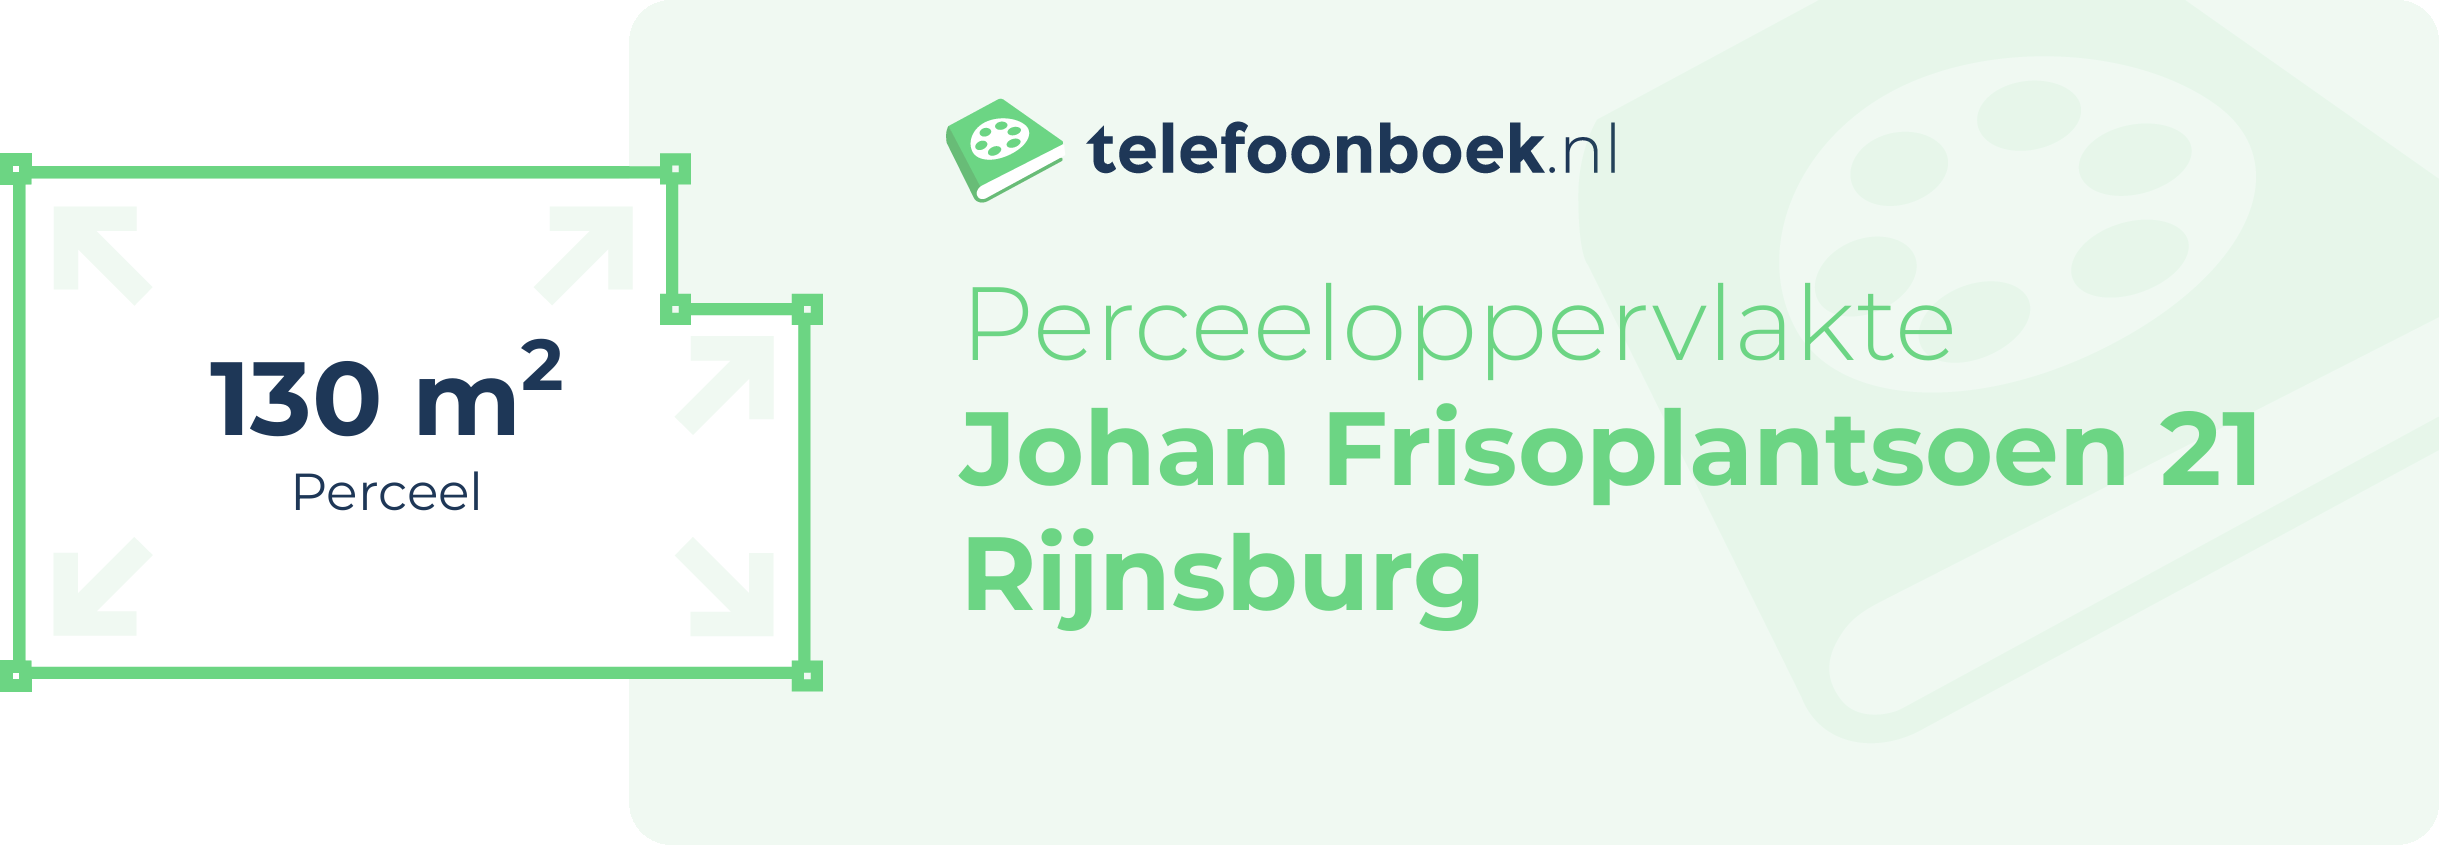 Perceeloppervlakte Johan Frisoplantsoen 21 Rijnsburg